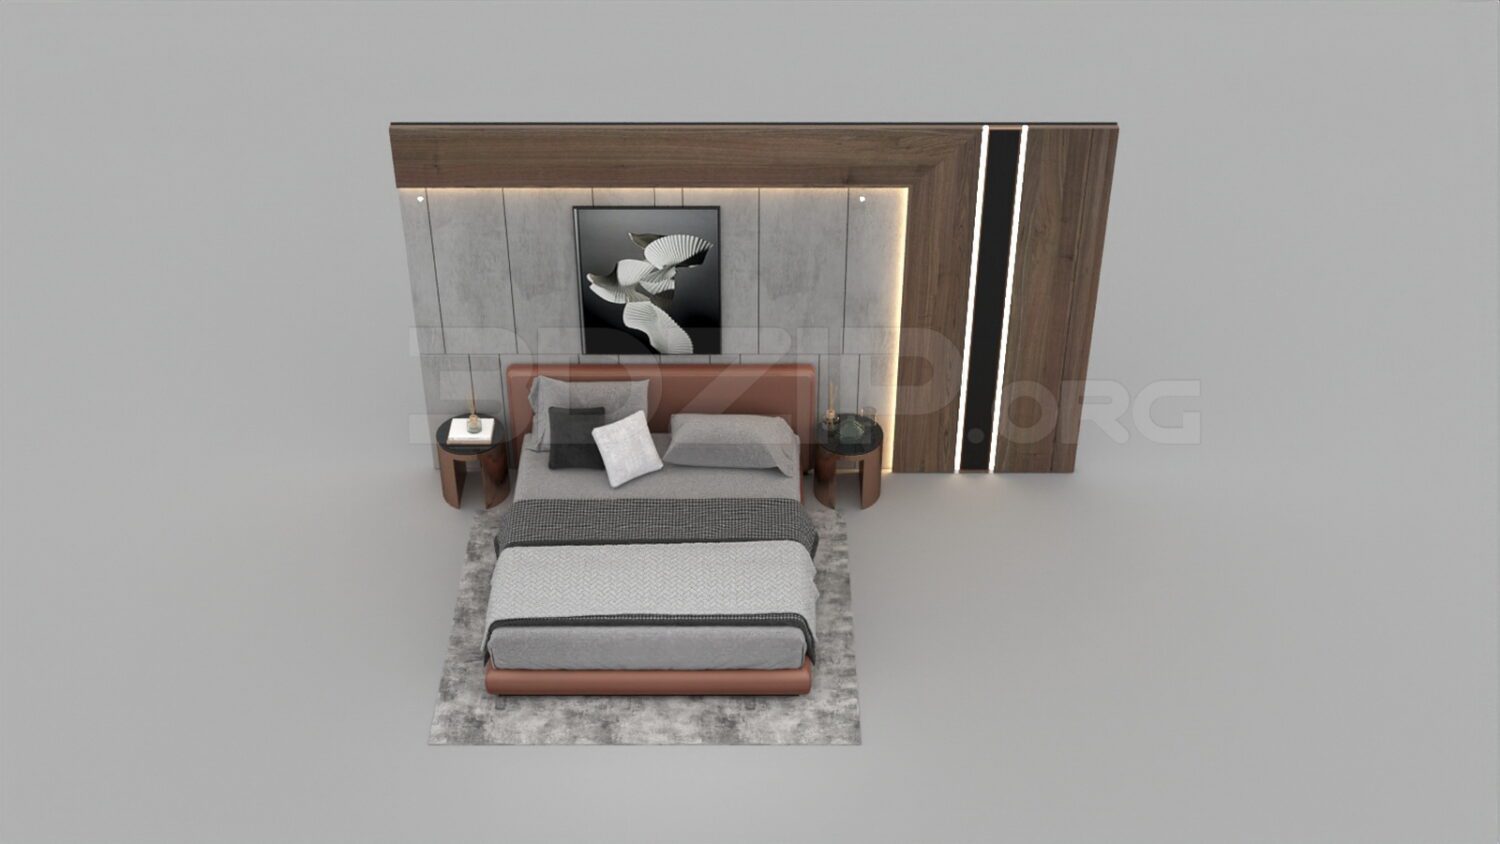 3010. Free 3D Bed Model Download